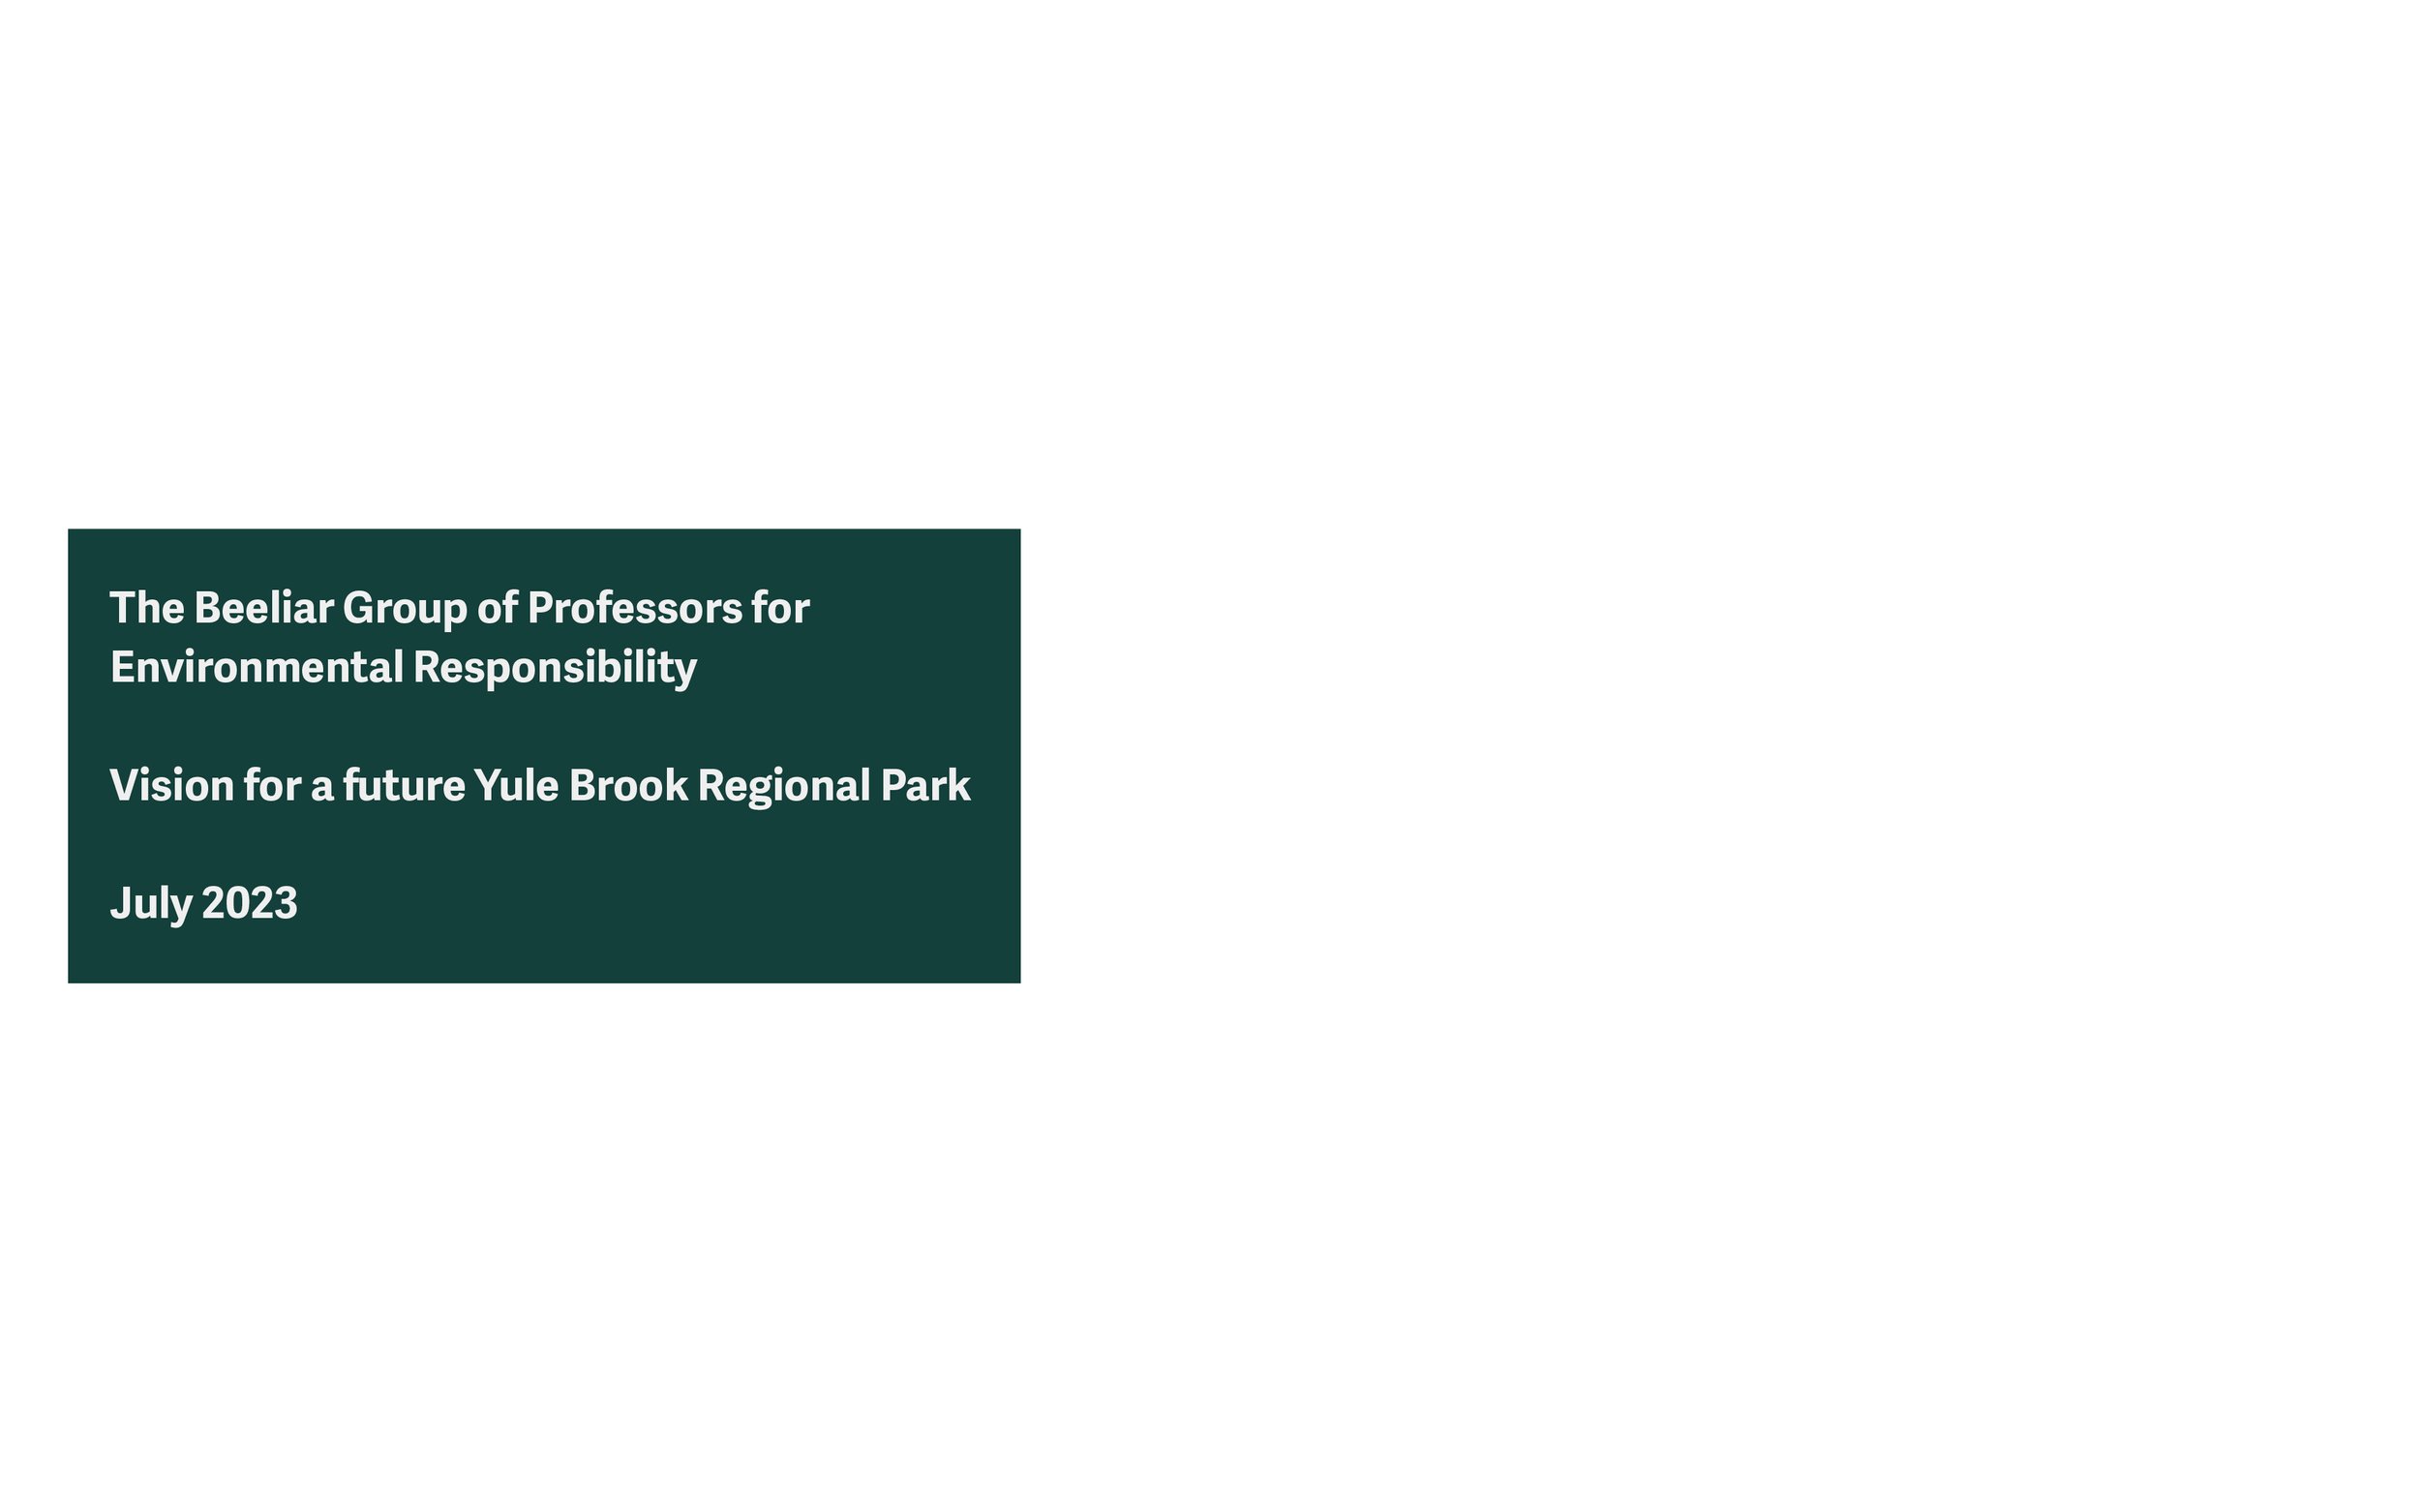 230806_The Beeliar Group's vision for a future Yule Brook Regional Park.jpg